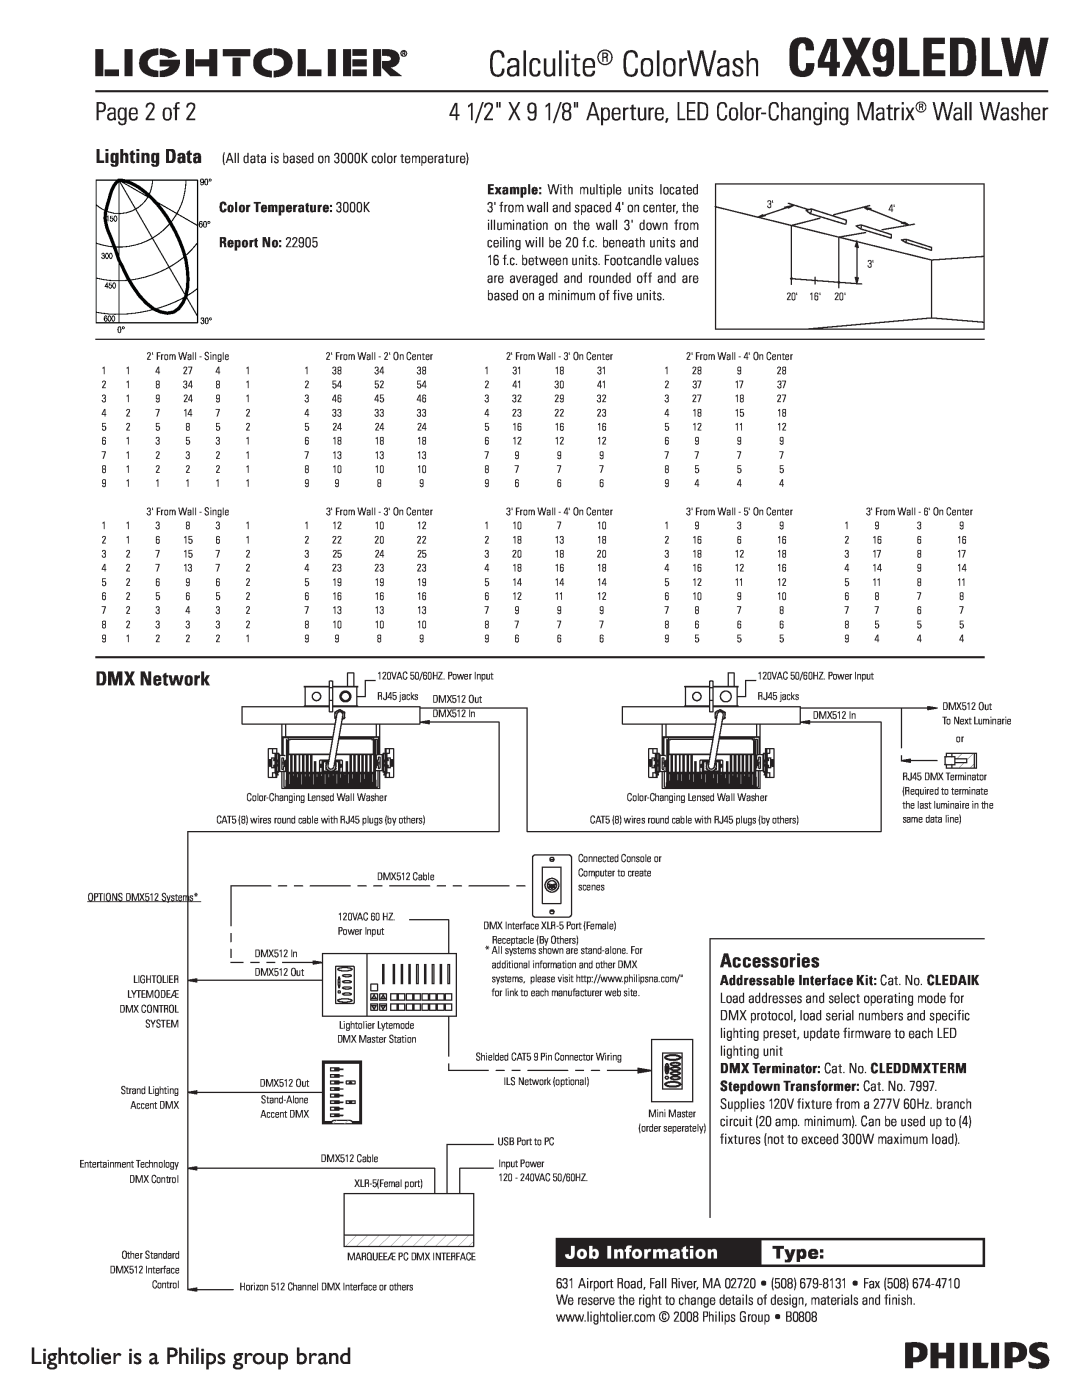 Lightolier C4X9LEDLW Page 2 of, DMX Network, Accessories, Color Temperature 3000K Report No, Stepdown Transformer Cat. No 